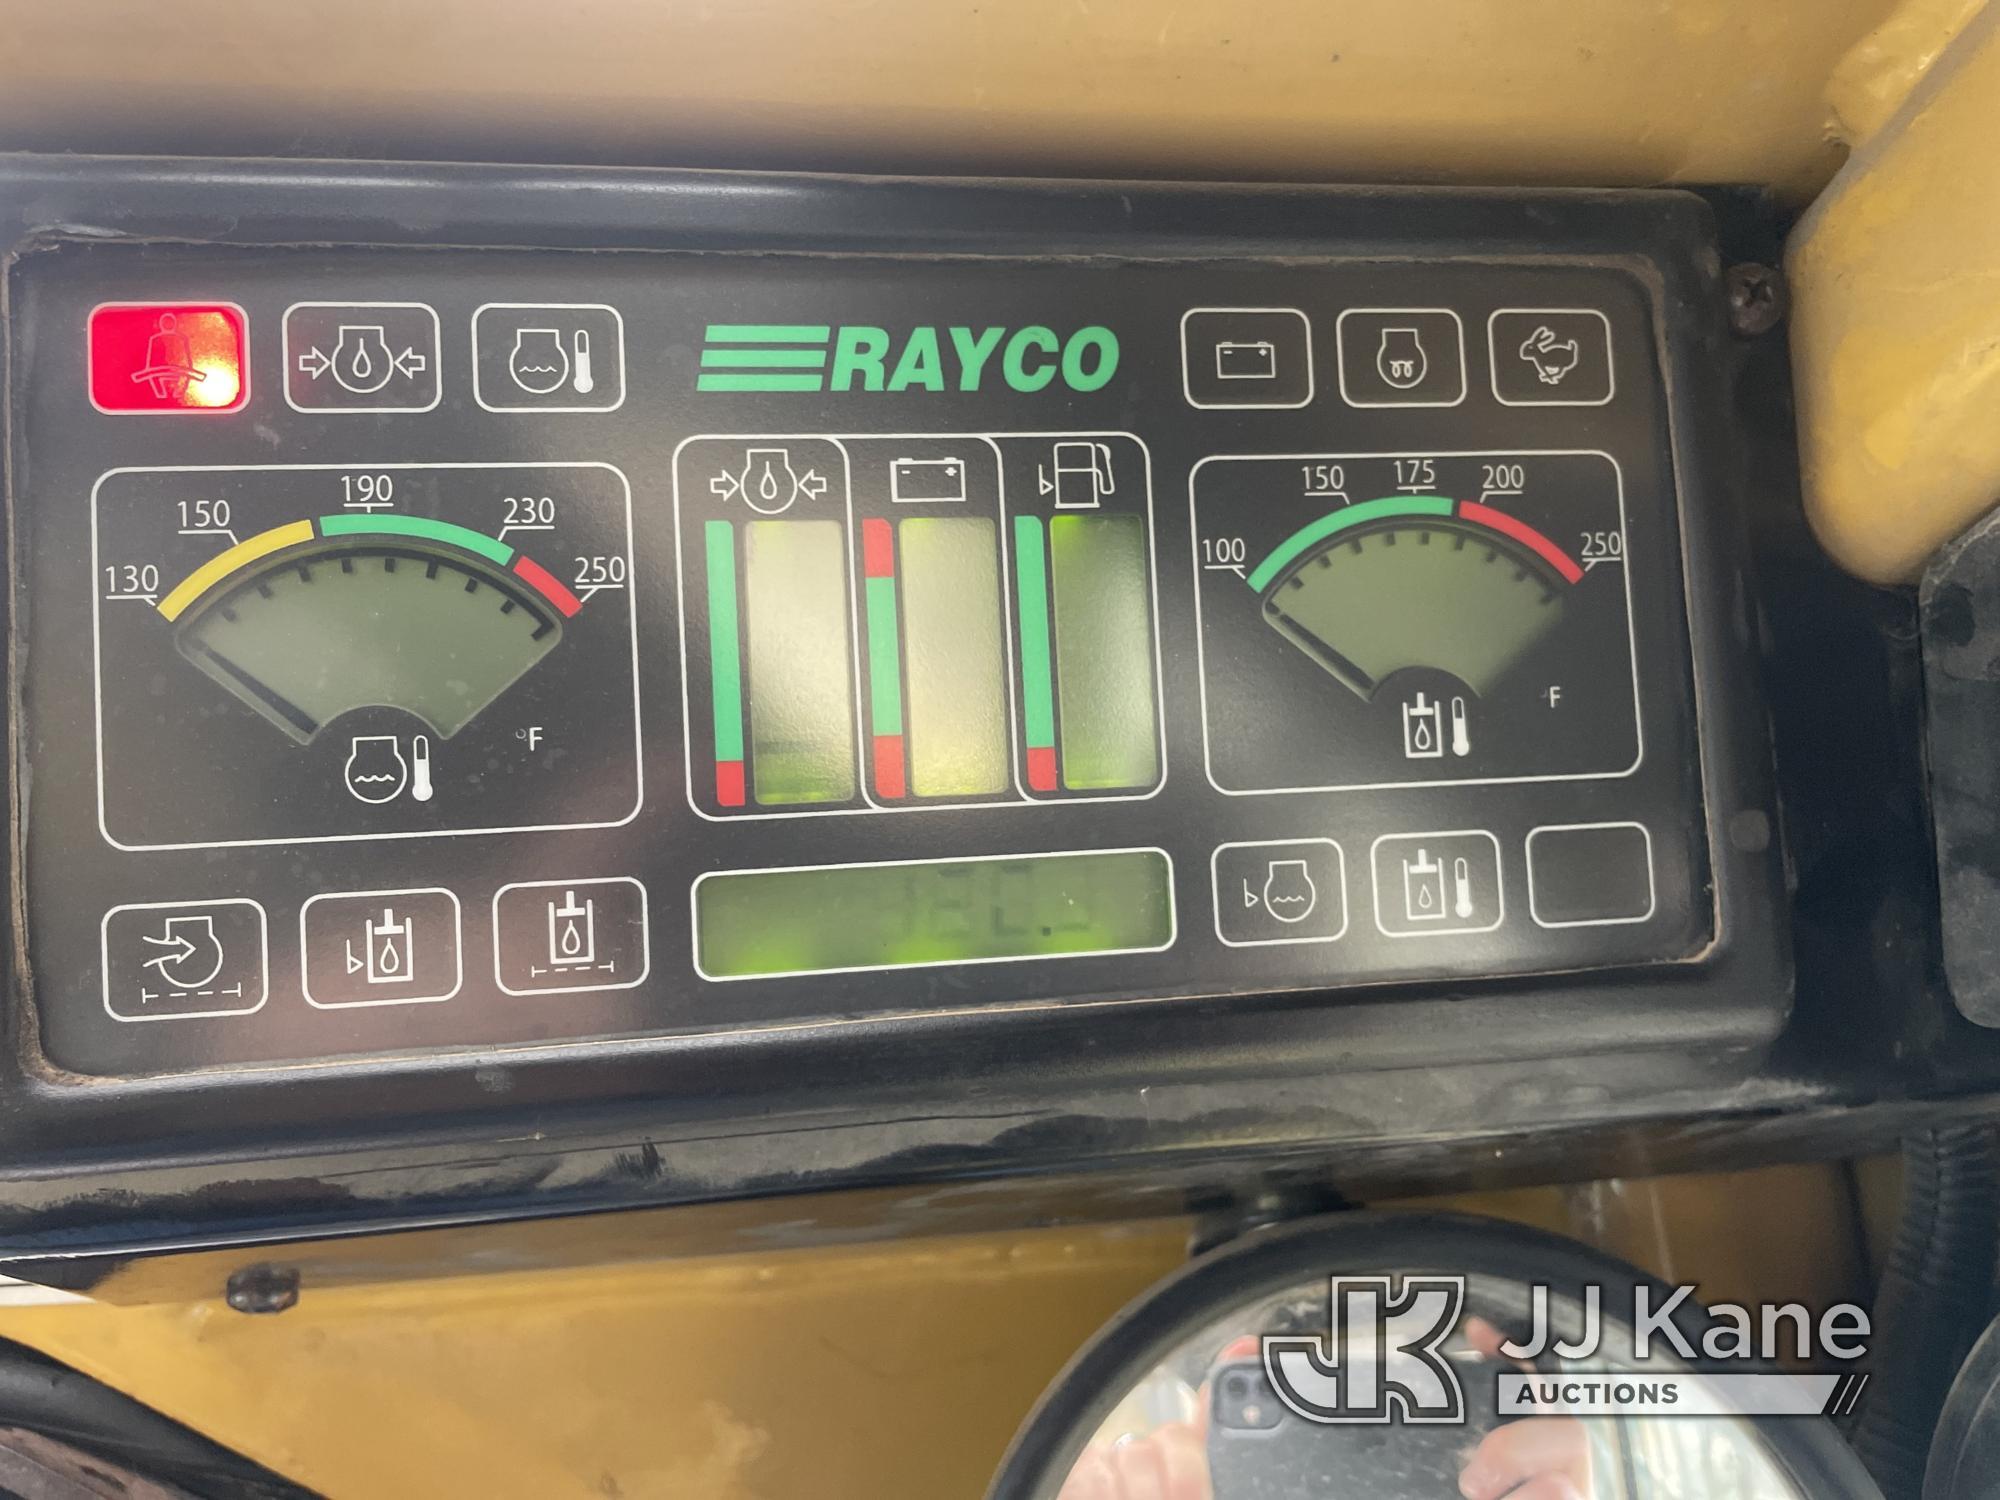 (Oklahoma City, OK) 2017 Rayco C100 Skid Steer Loader, Item 1412155 is attached. PLEASE SALE TOGETHE